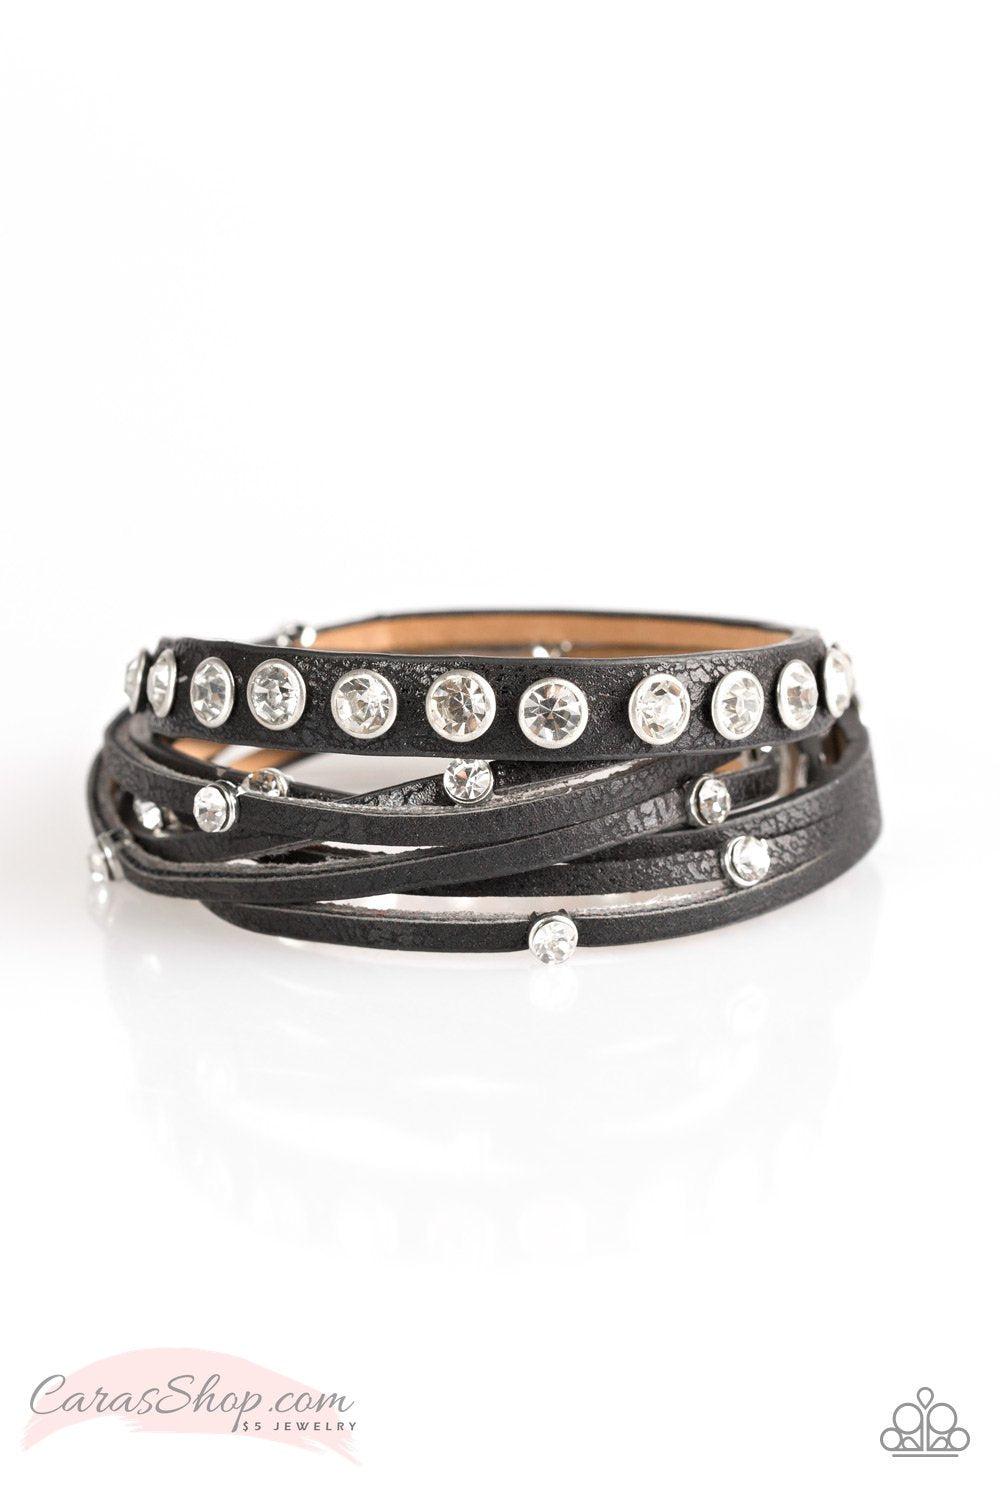 CATWALK It Off Black Leather Wrap Snap Bracelet - Paparazzi Accessories-CarasShop.com - $5 Jewelry by Cara Jewels